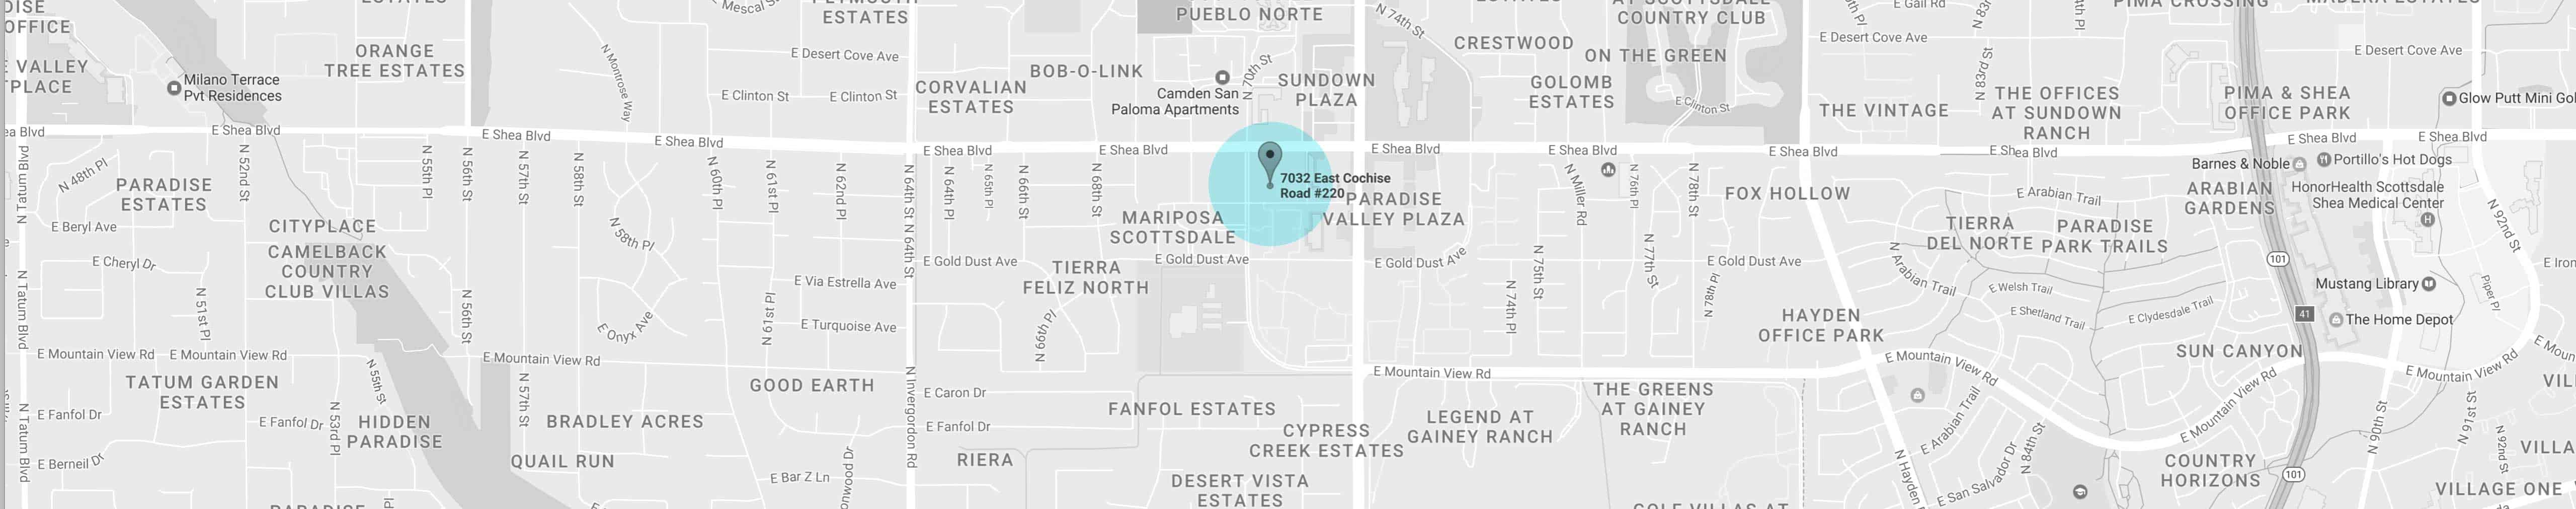 Scottsdale Location Map 2